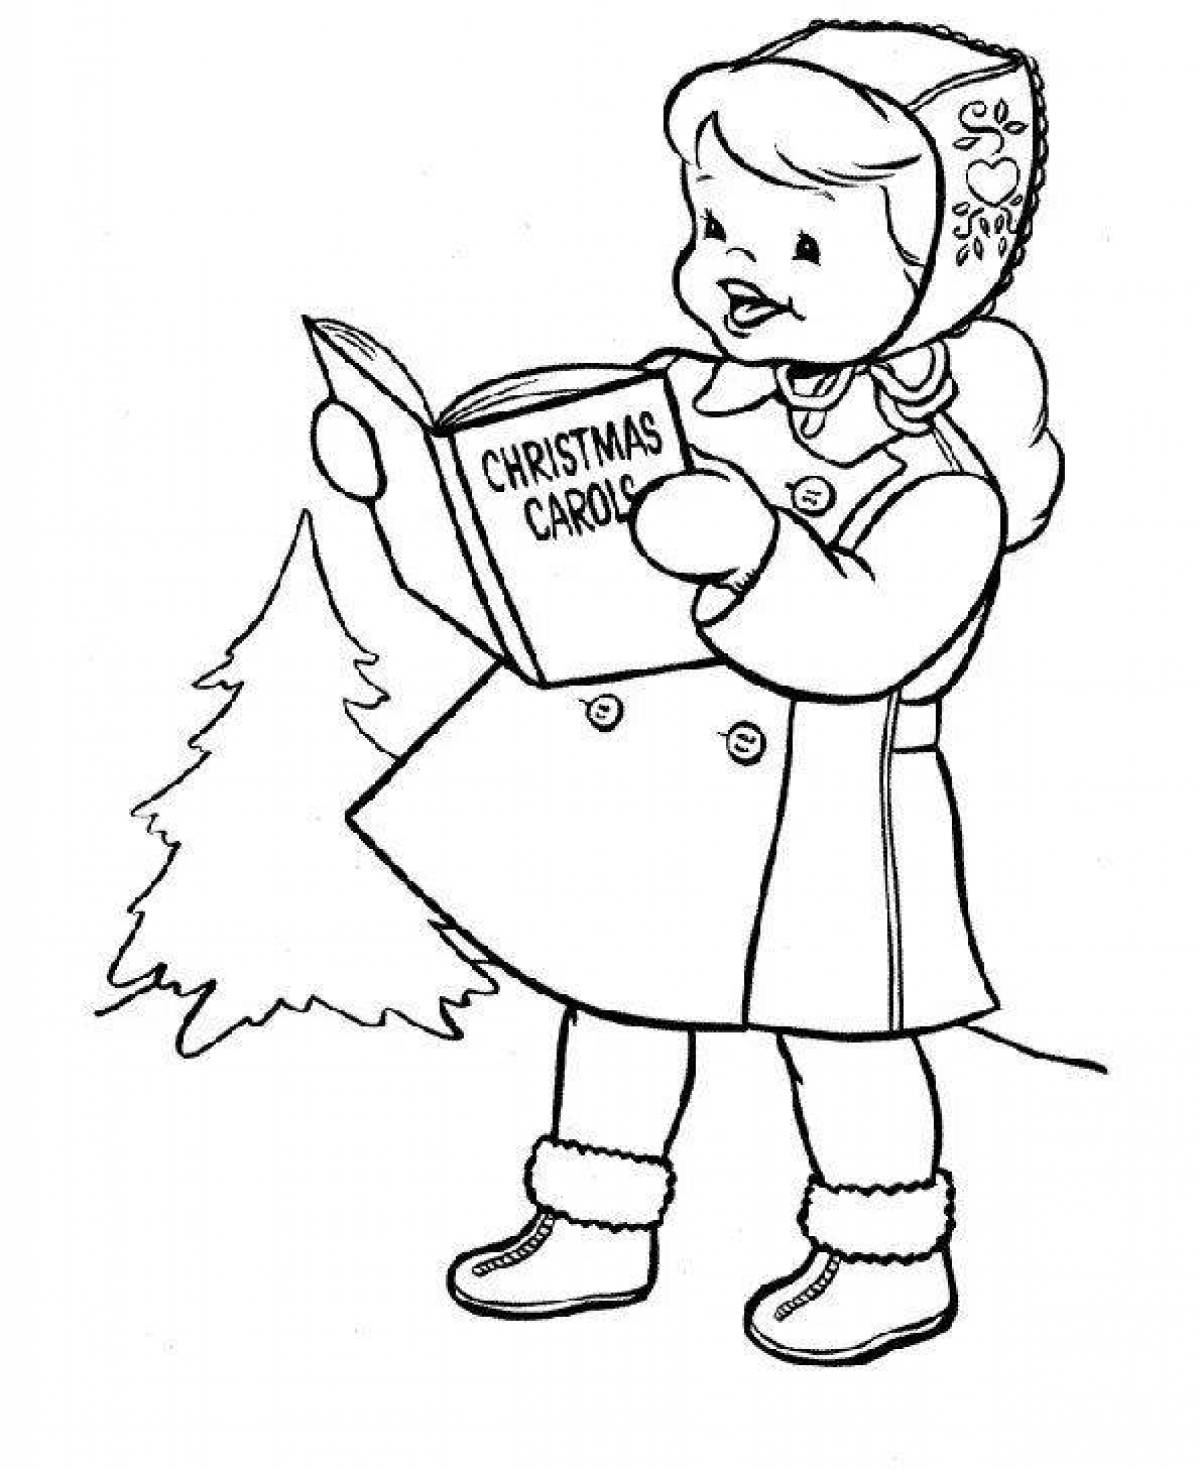 Shiny Christmas carol coloring book